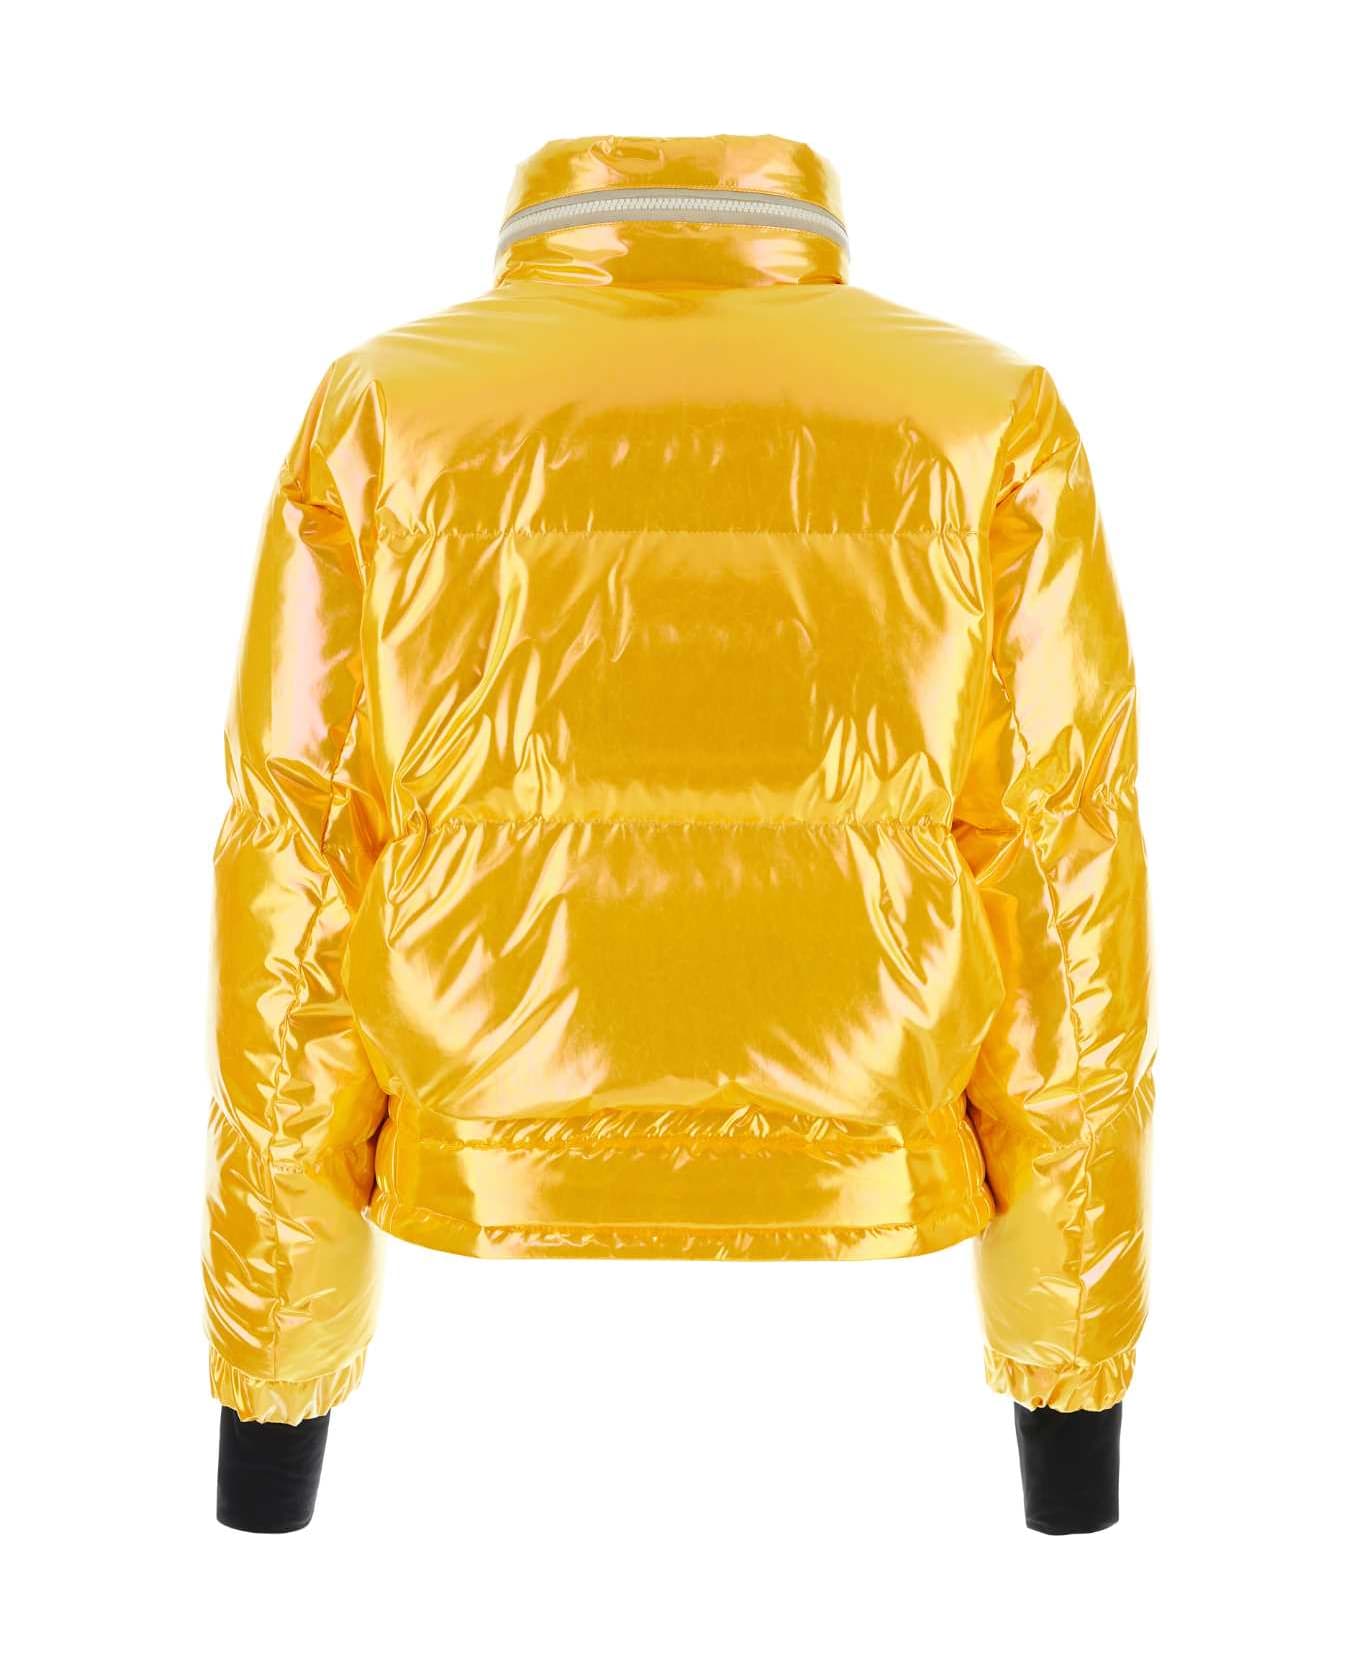 Moncler Grenoble Yellow Polyester Biche Down Jacket - M10